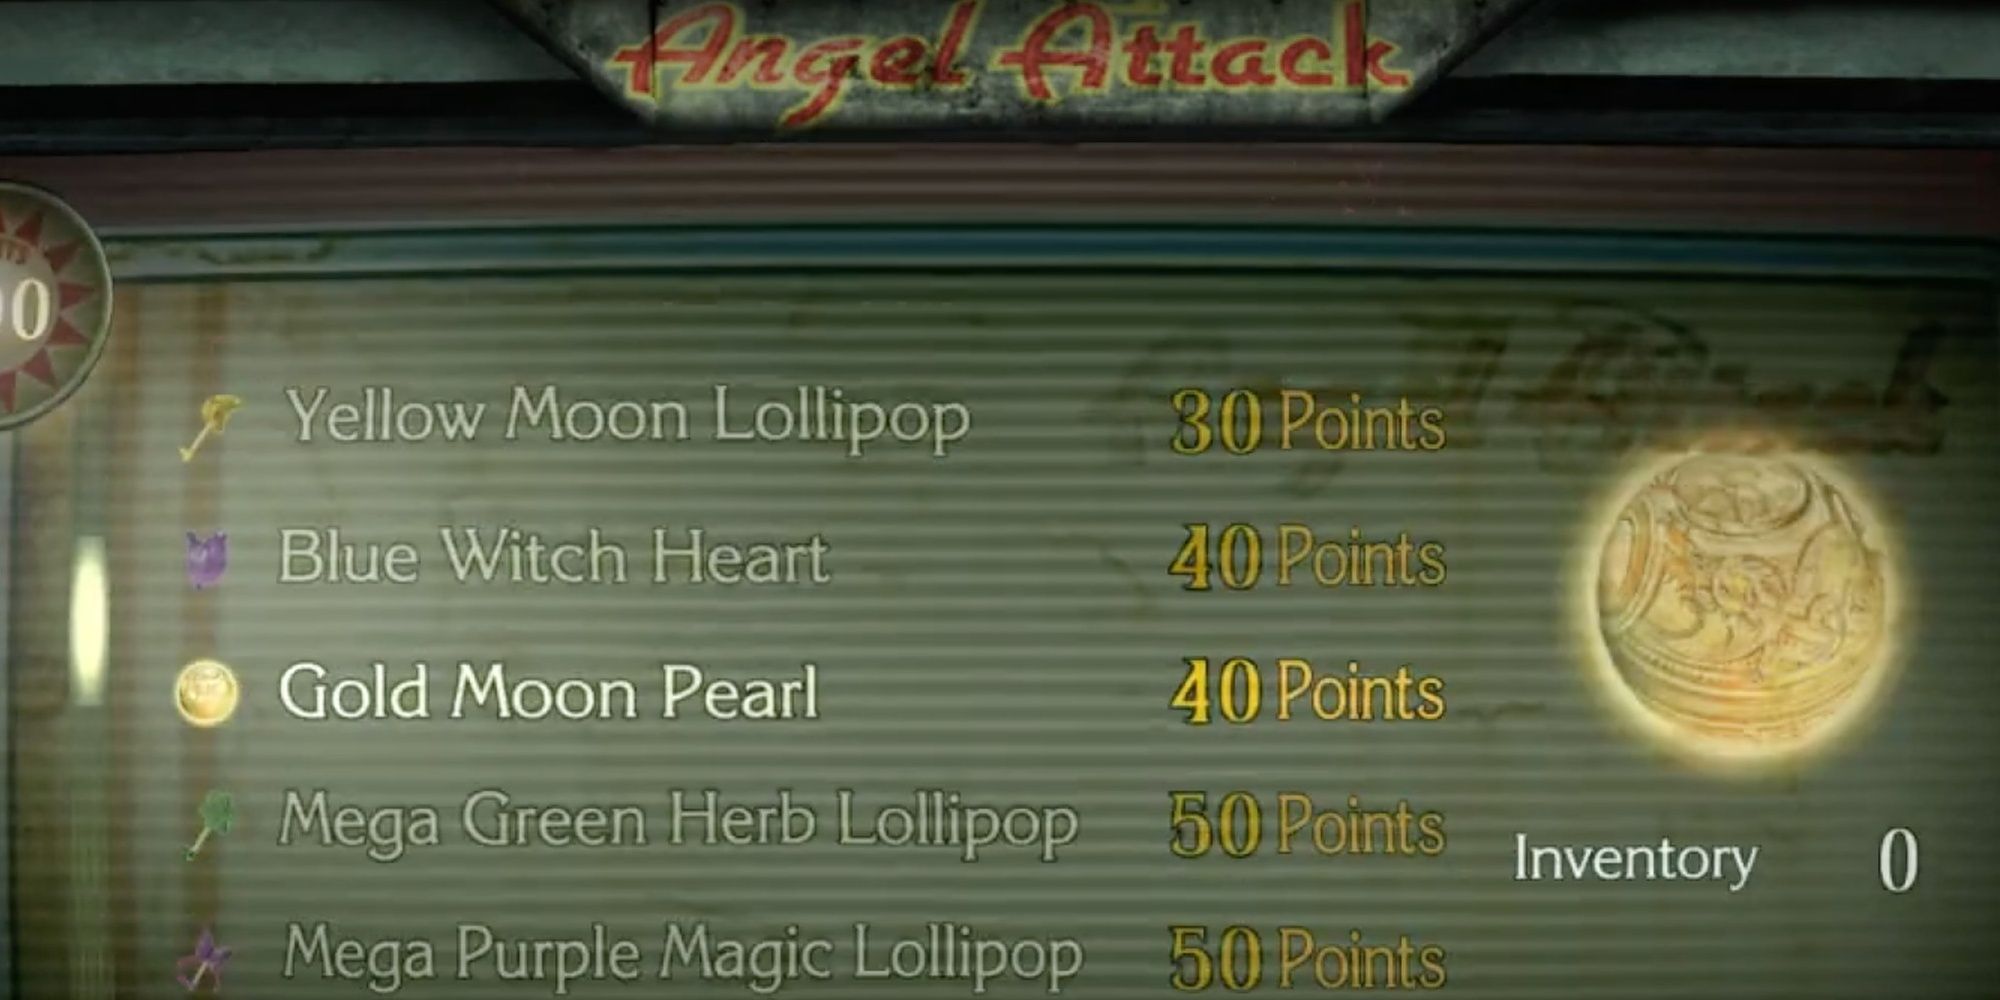 Golden Moon Pearl in Bayonetta Angel Attack minigame